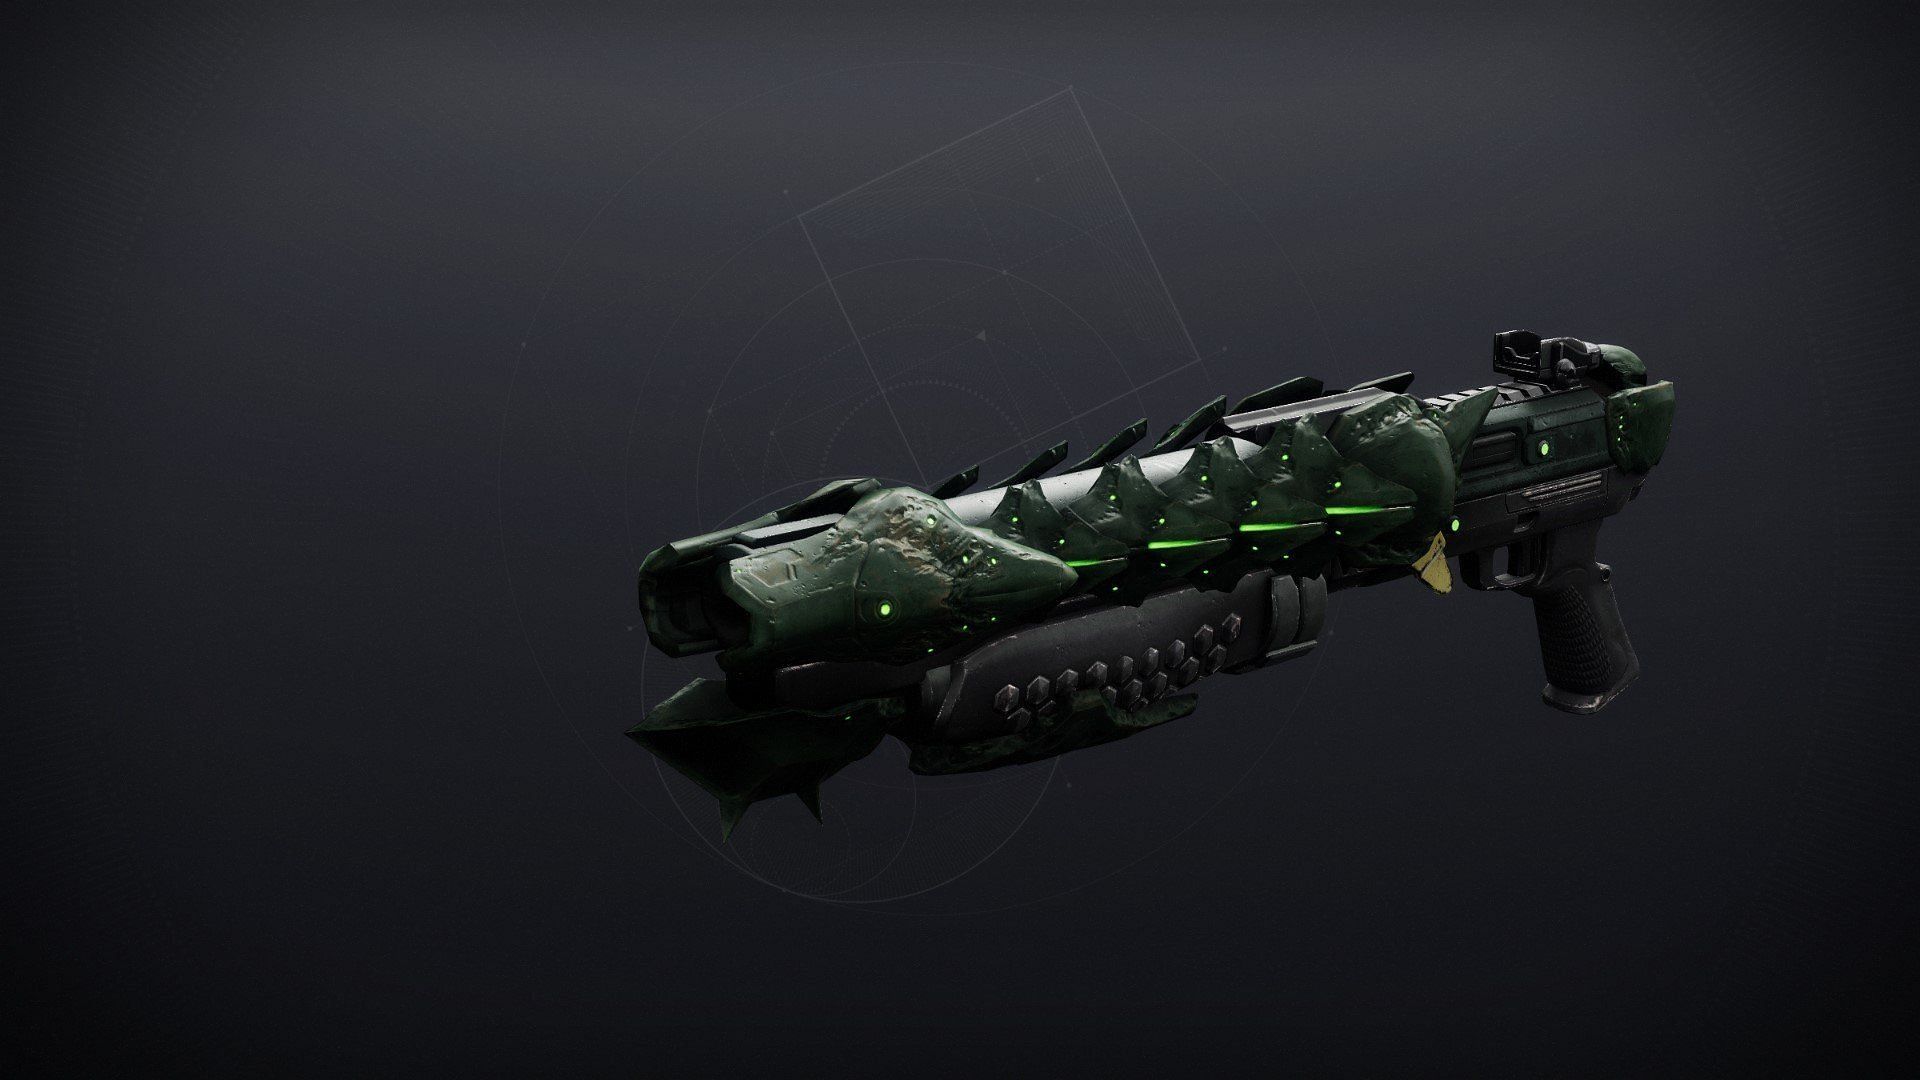 The Swordbreaker Legendary shotgun (Image via Bungie)